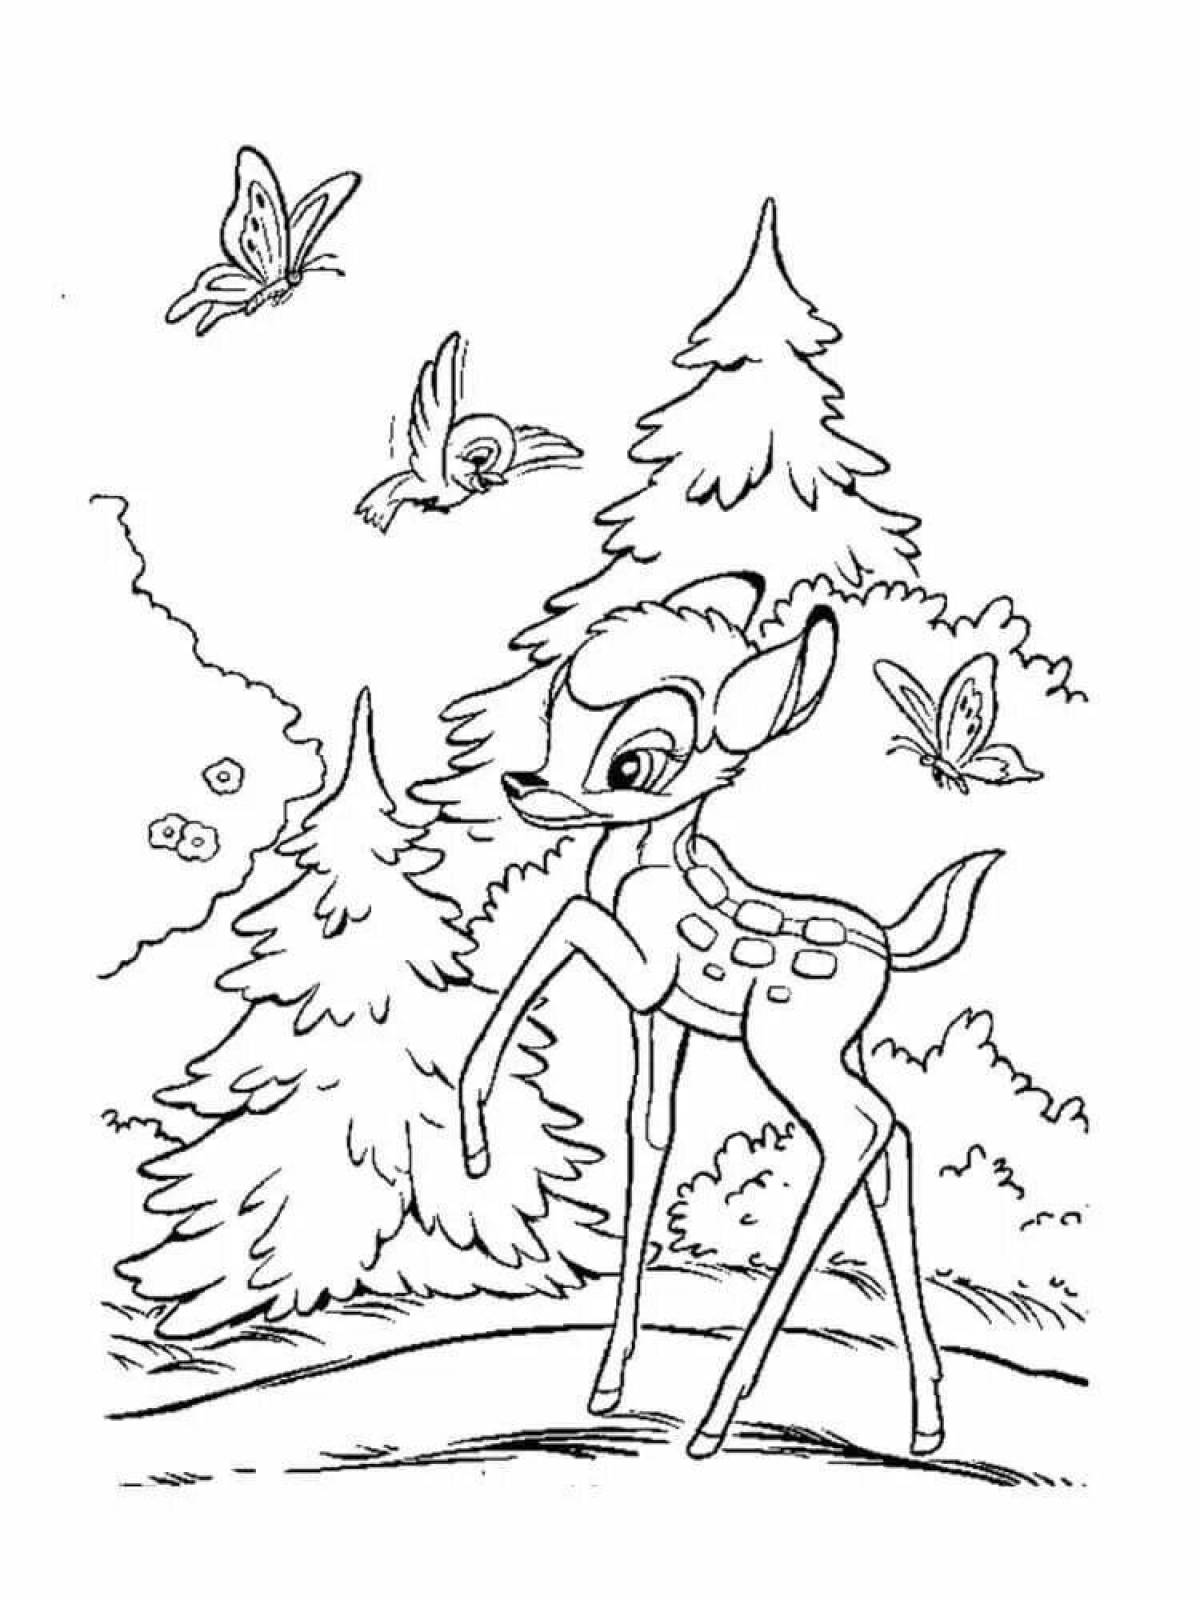 Bambi faun live coloring page